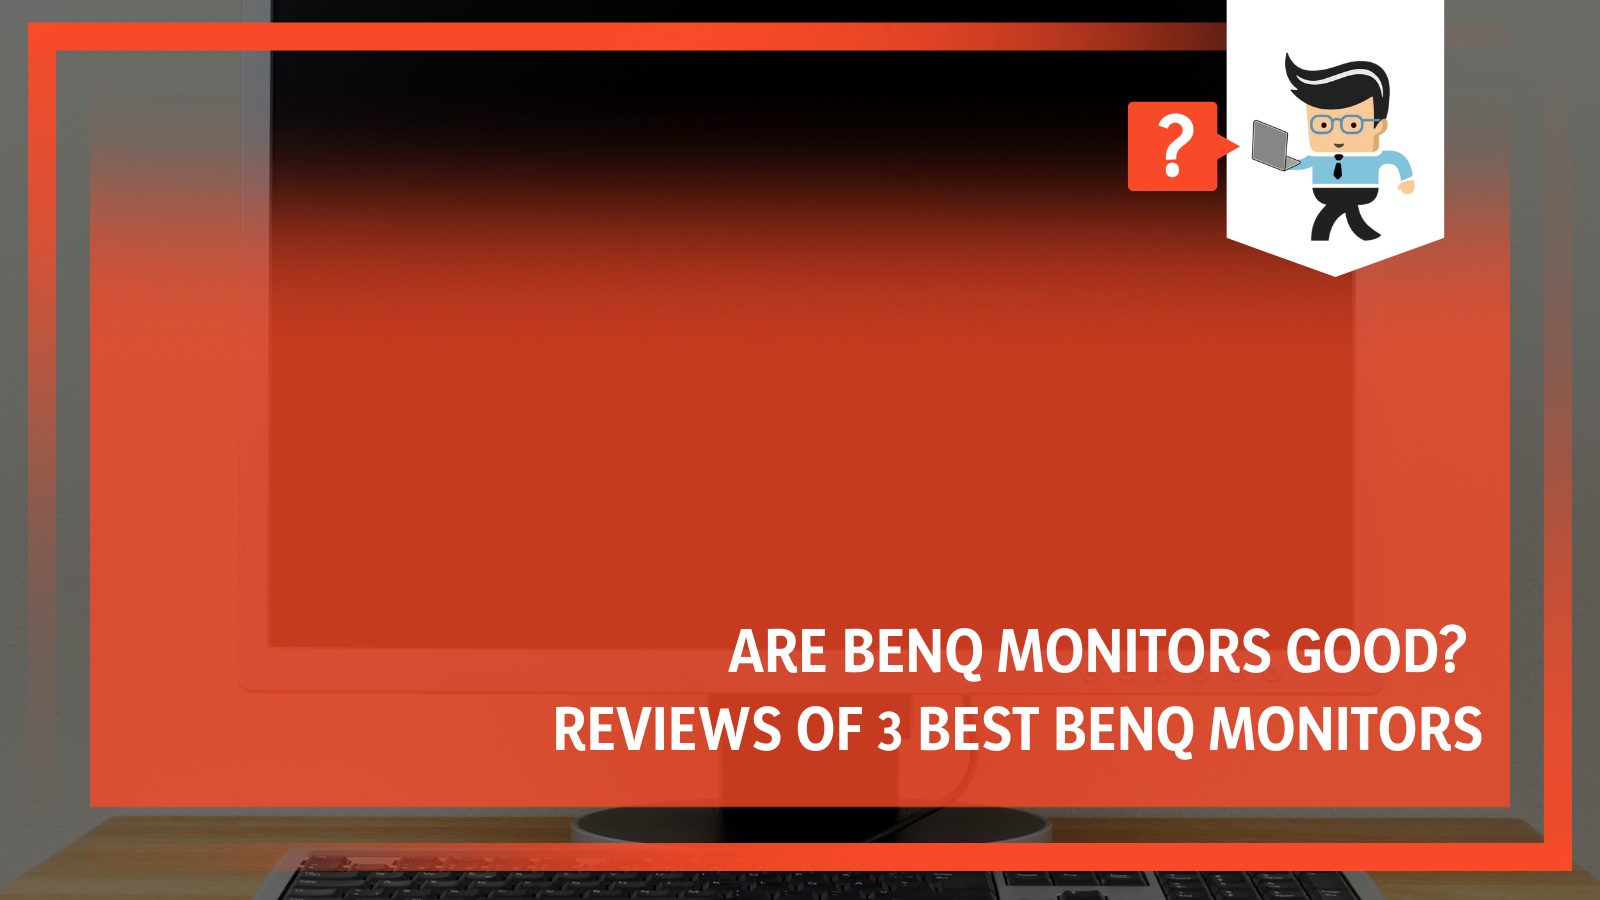 Reviews of 3 Best Benq Monitors